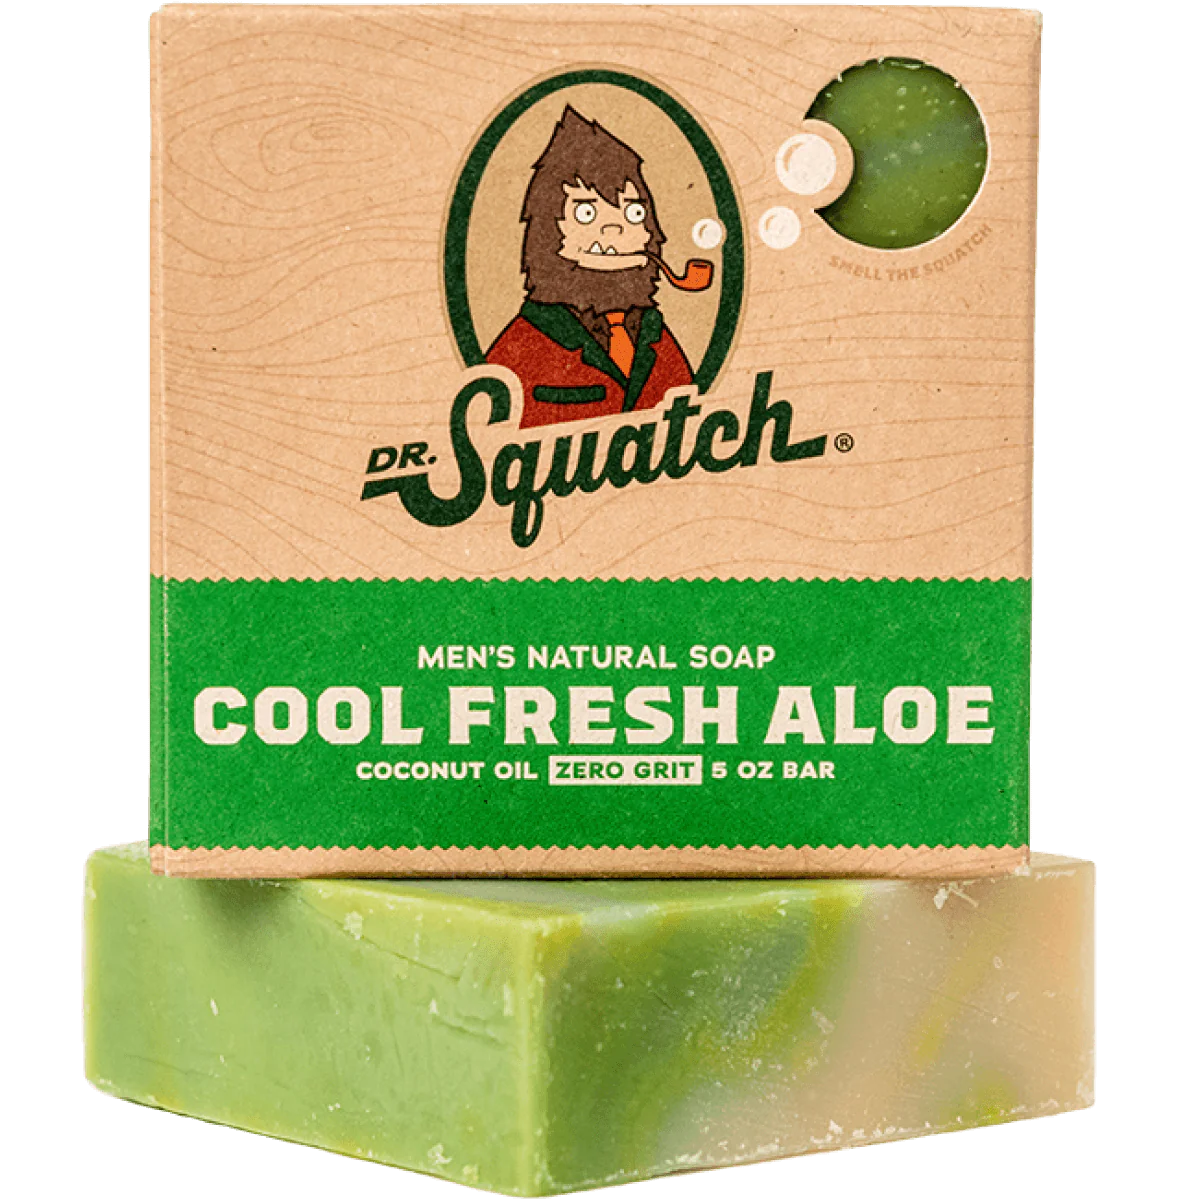 Men's Natural Soap - Cool Fresh Aloe